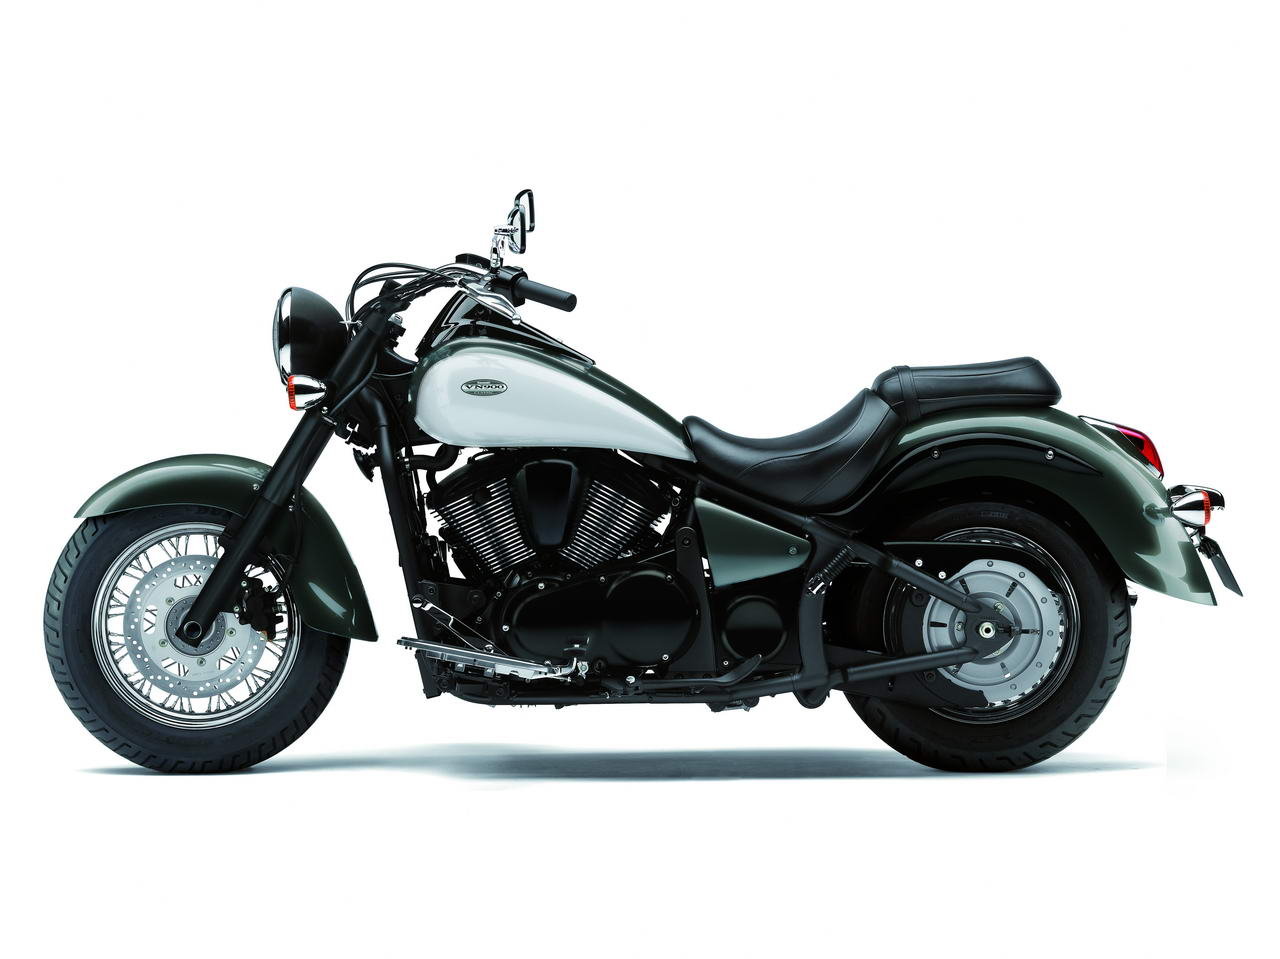 Listino Kawasaki KLX 125 Moto 50 e 125 - image 15538_kawasaki-vn900-classic on https://moto.motori.net